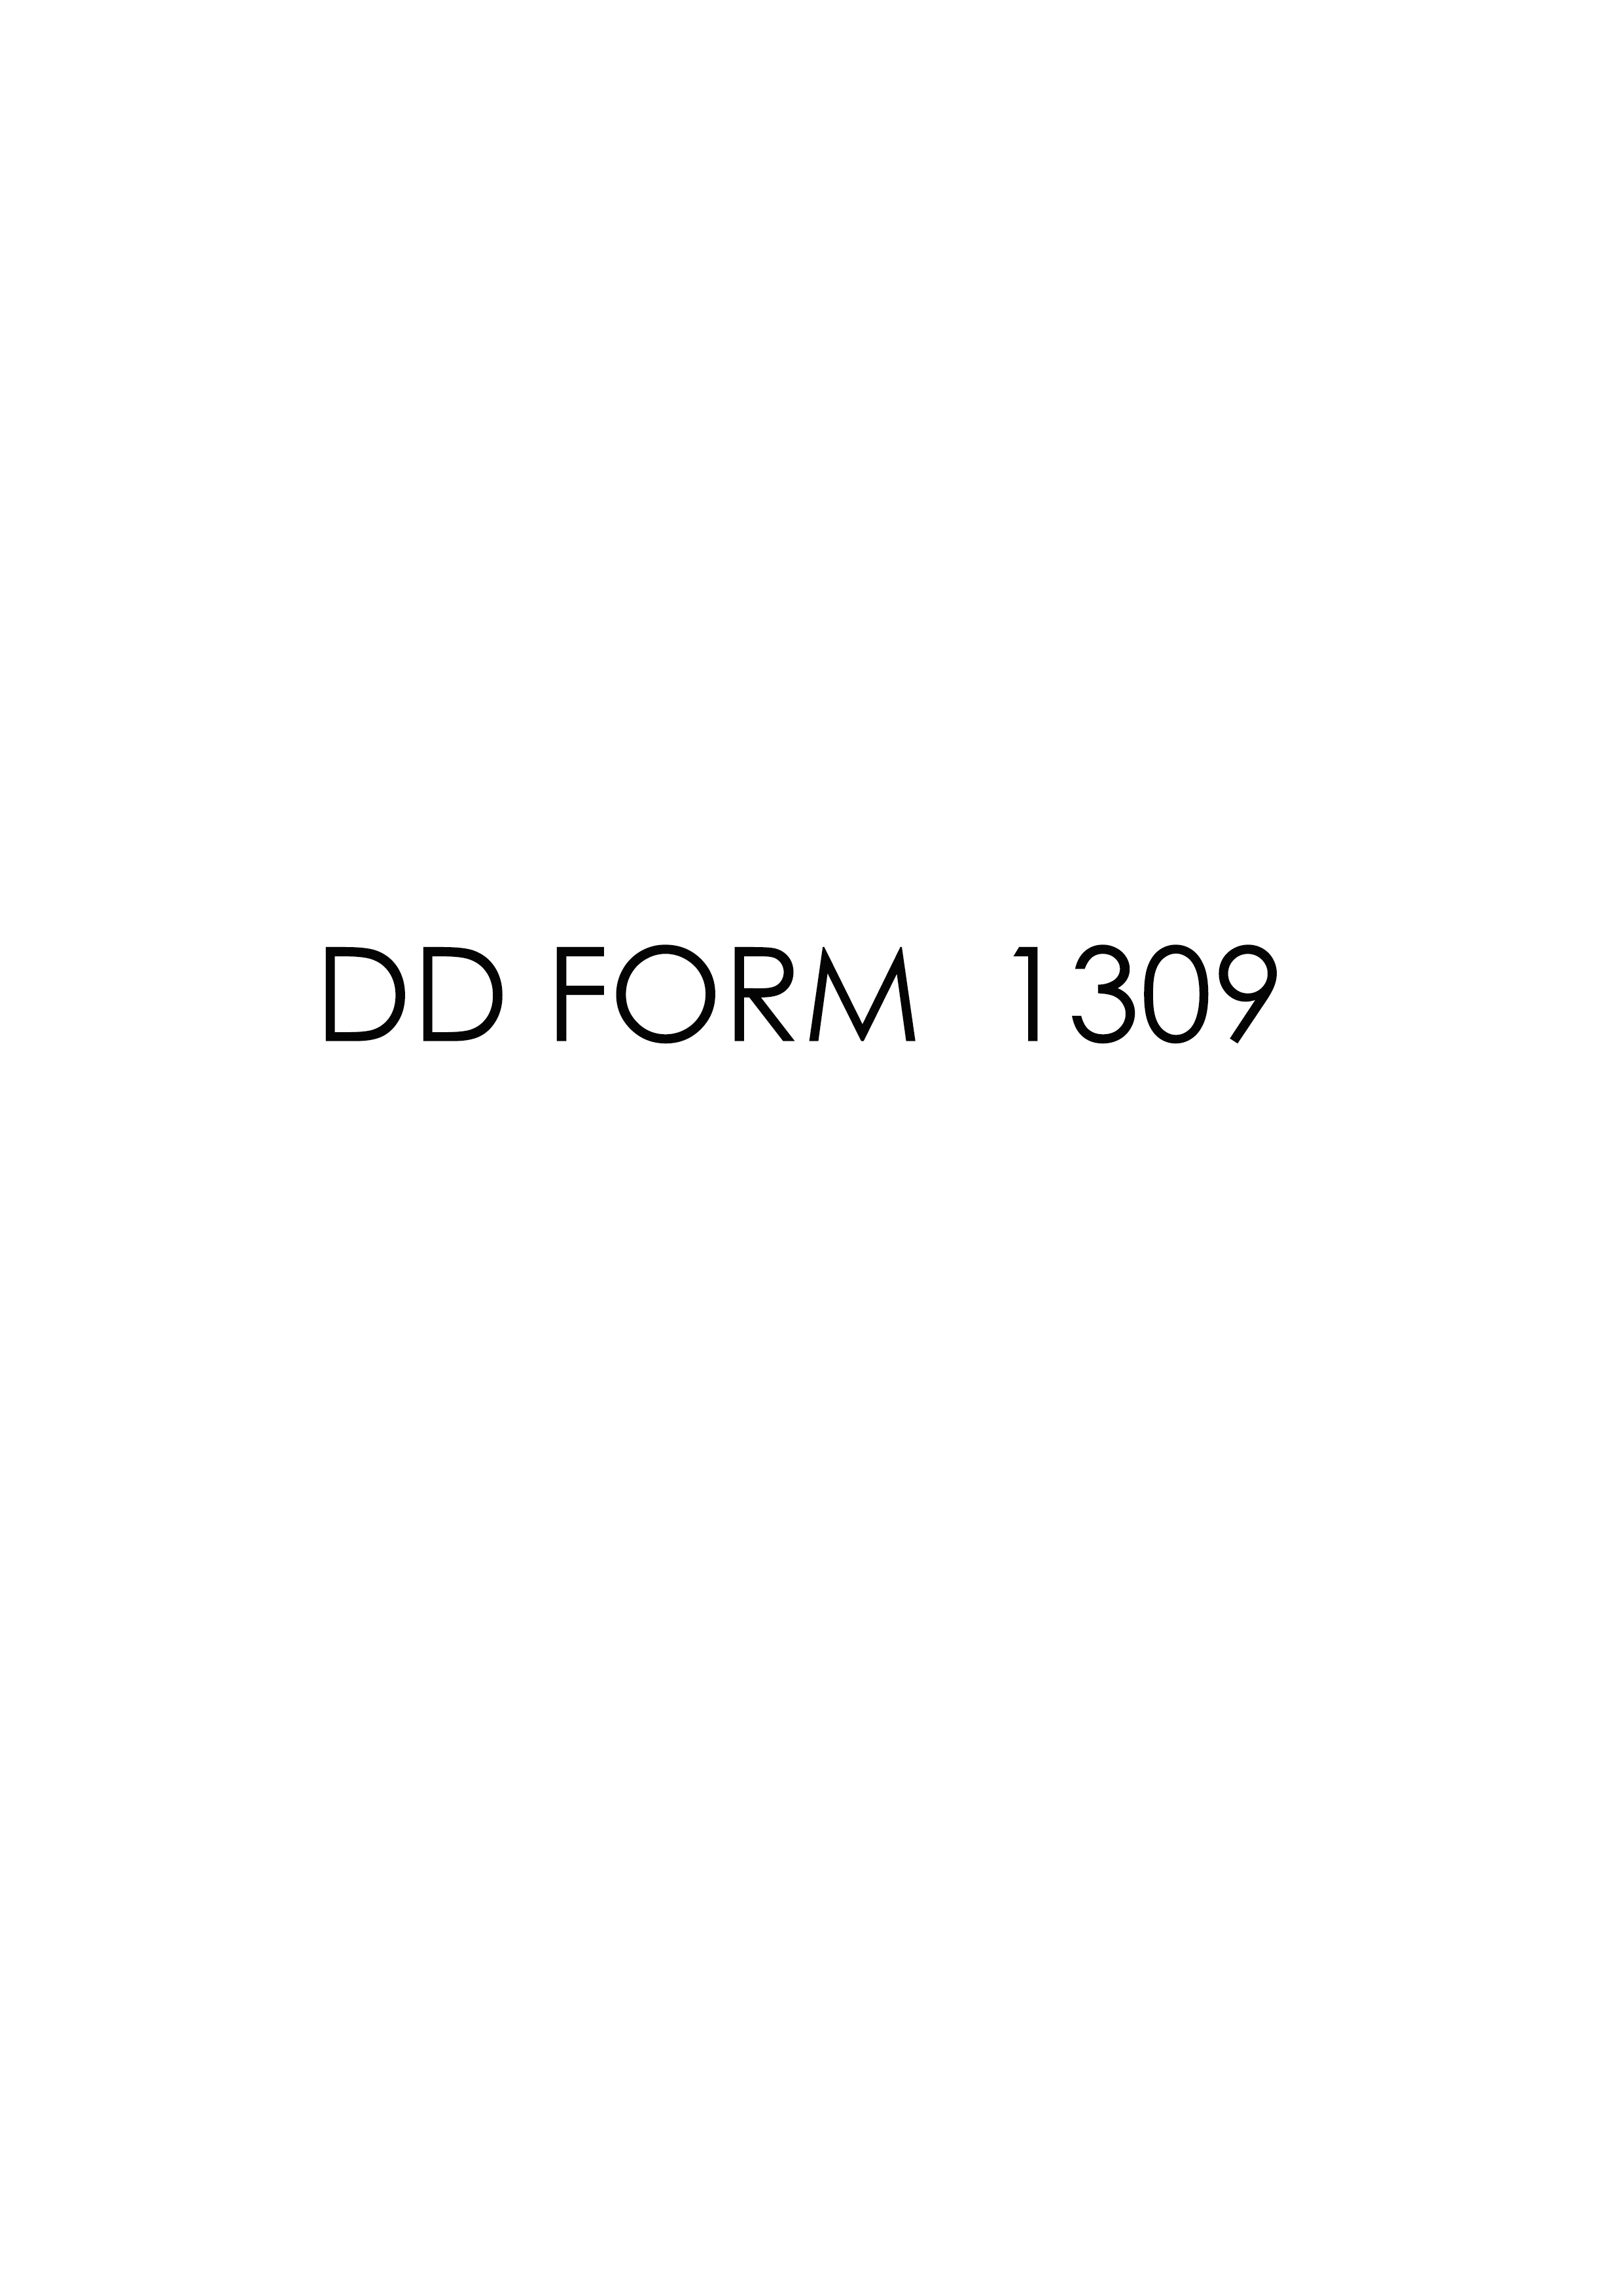 Download dd 1309 Form